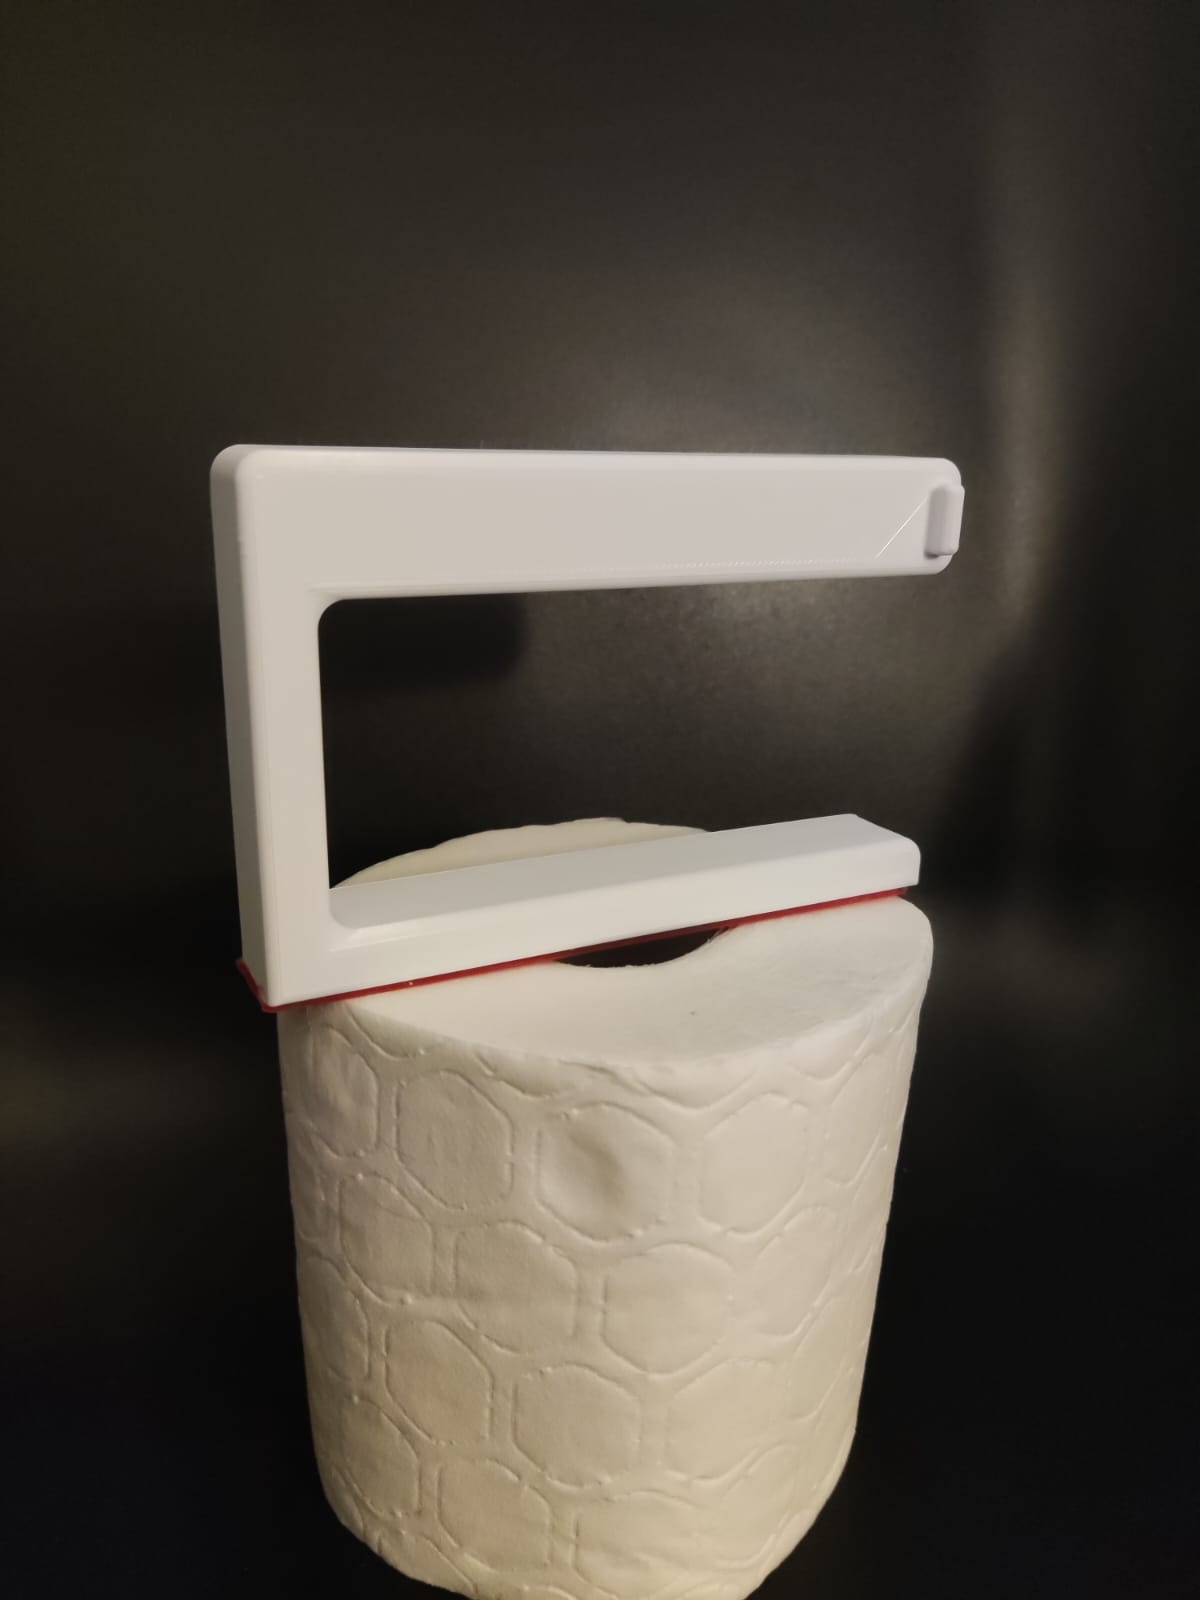 Toilet Roll Holder (World's greatest 3D-printed, stick-on toilet roller)